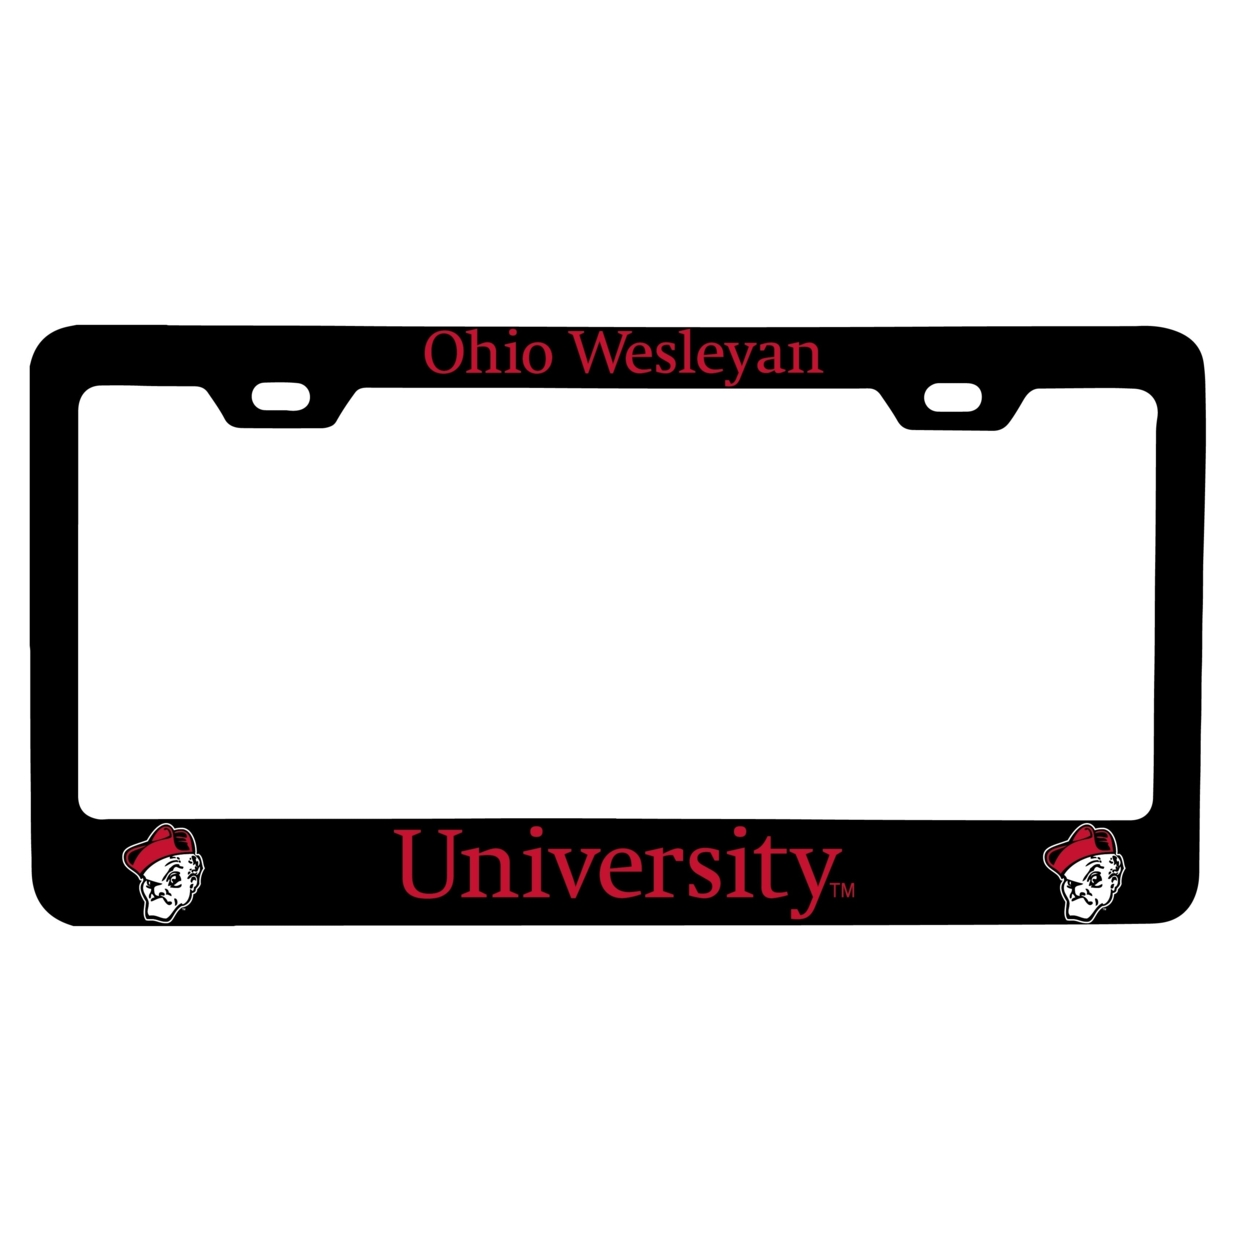 Ohio Wesleyan University License Plate Frame